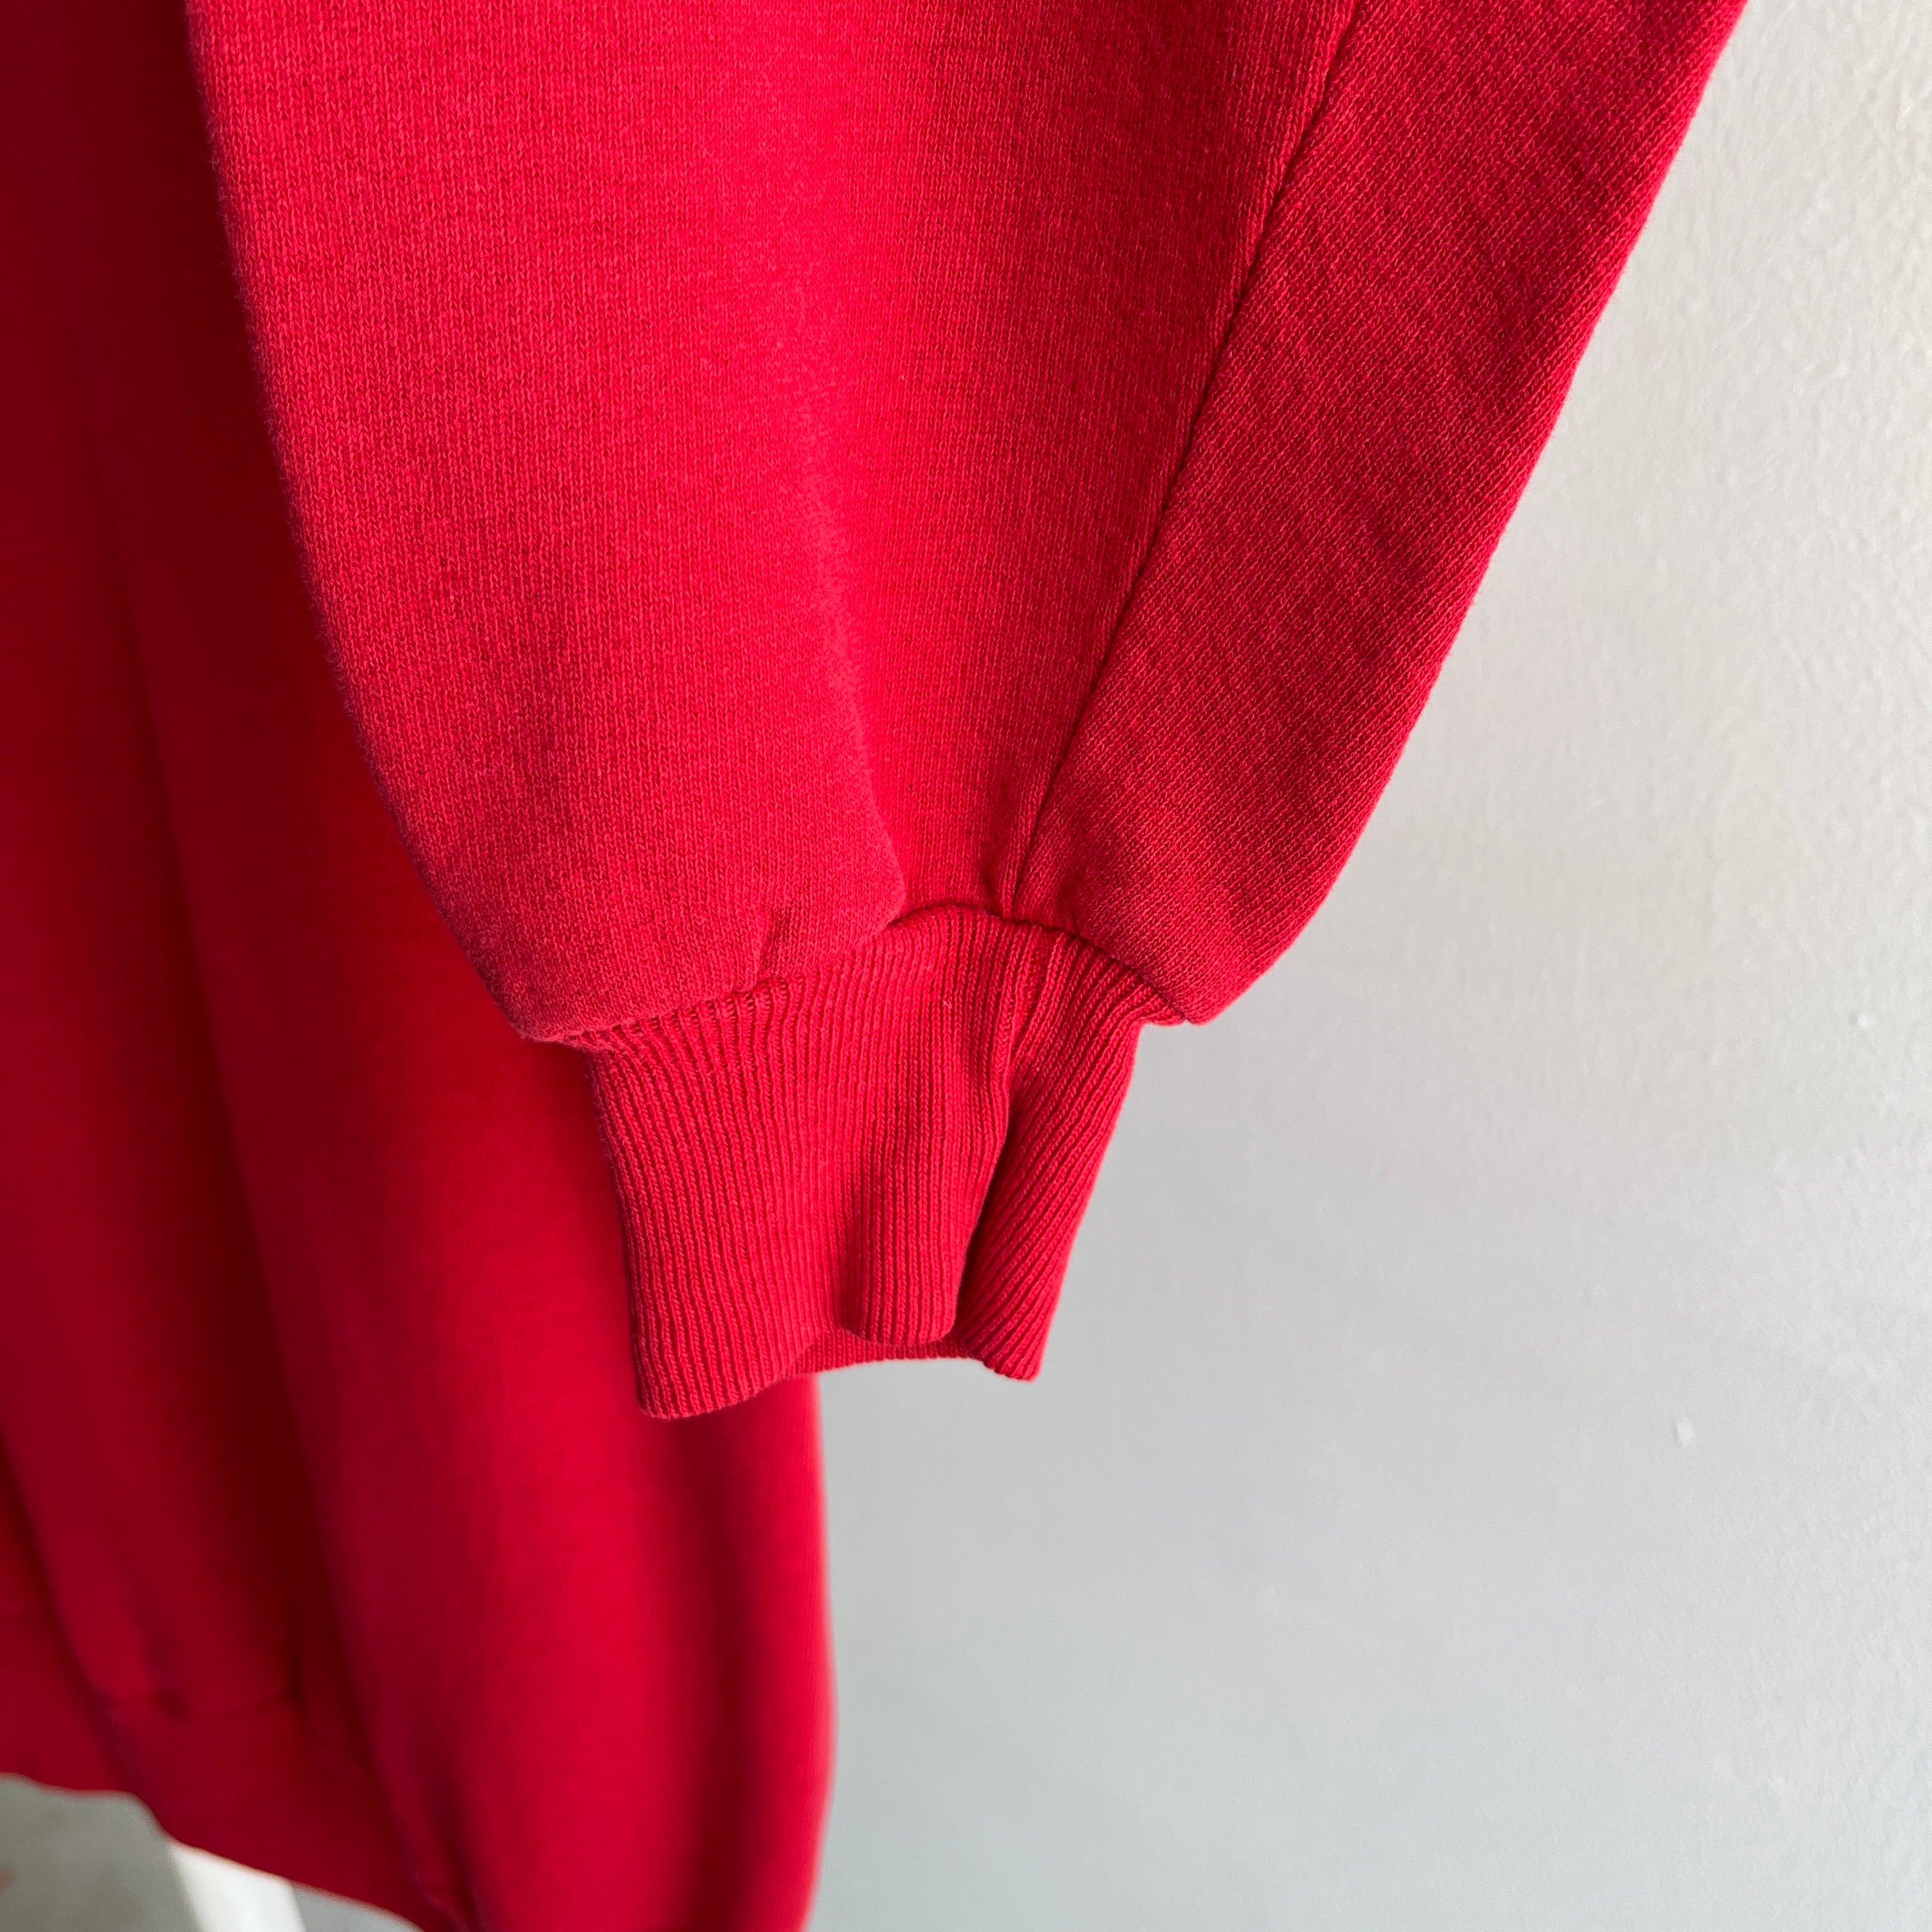 1980s Blank Red Jerzees Raglan Sweatshirt